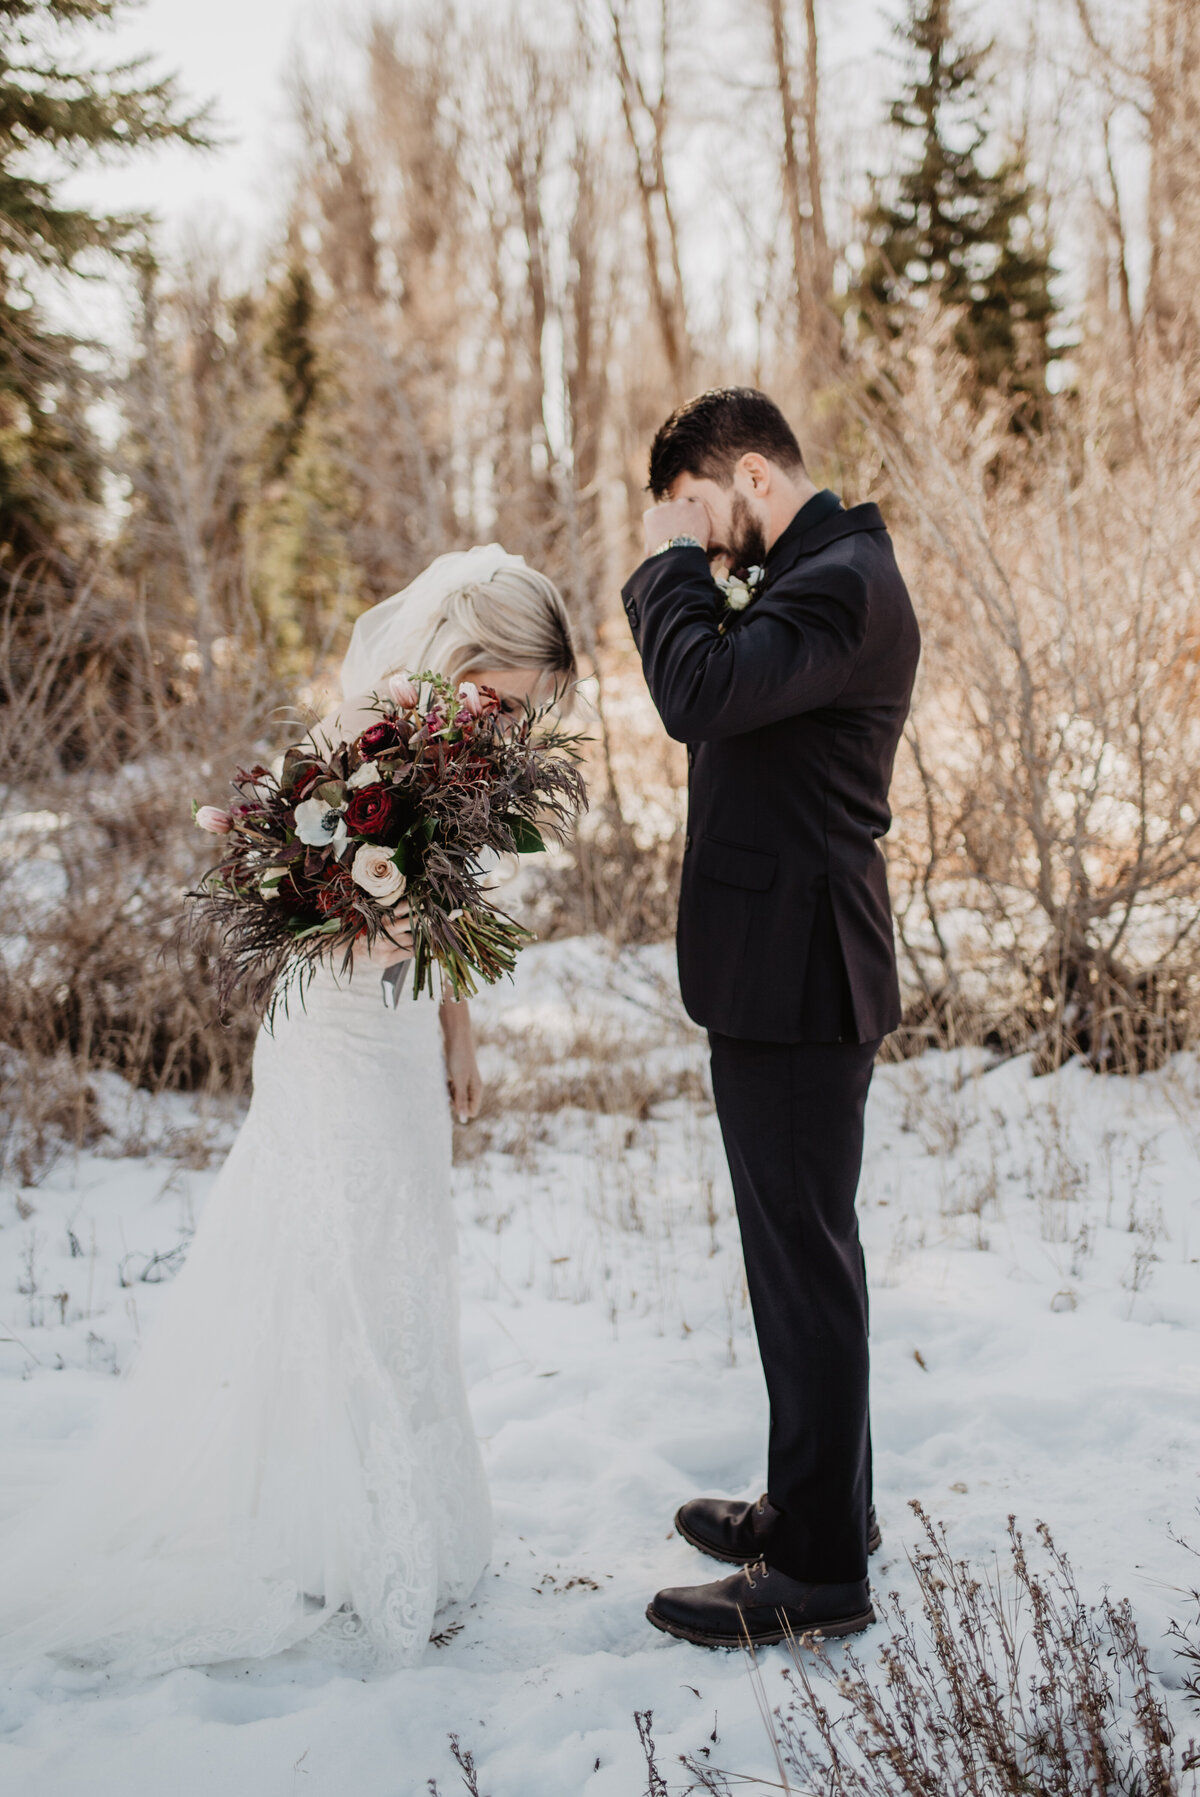 Jackson Hole Photographers capture groom wiping tears